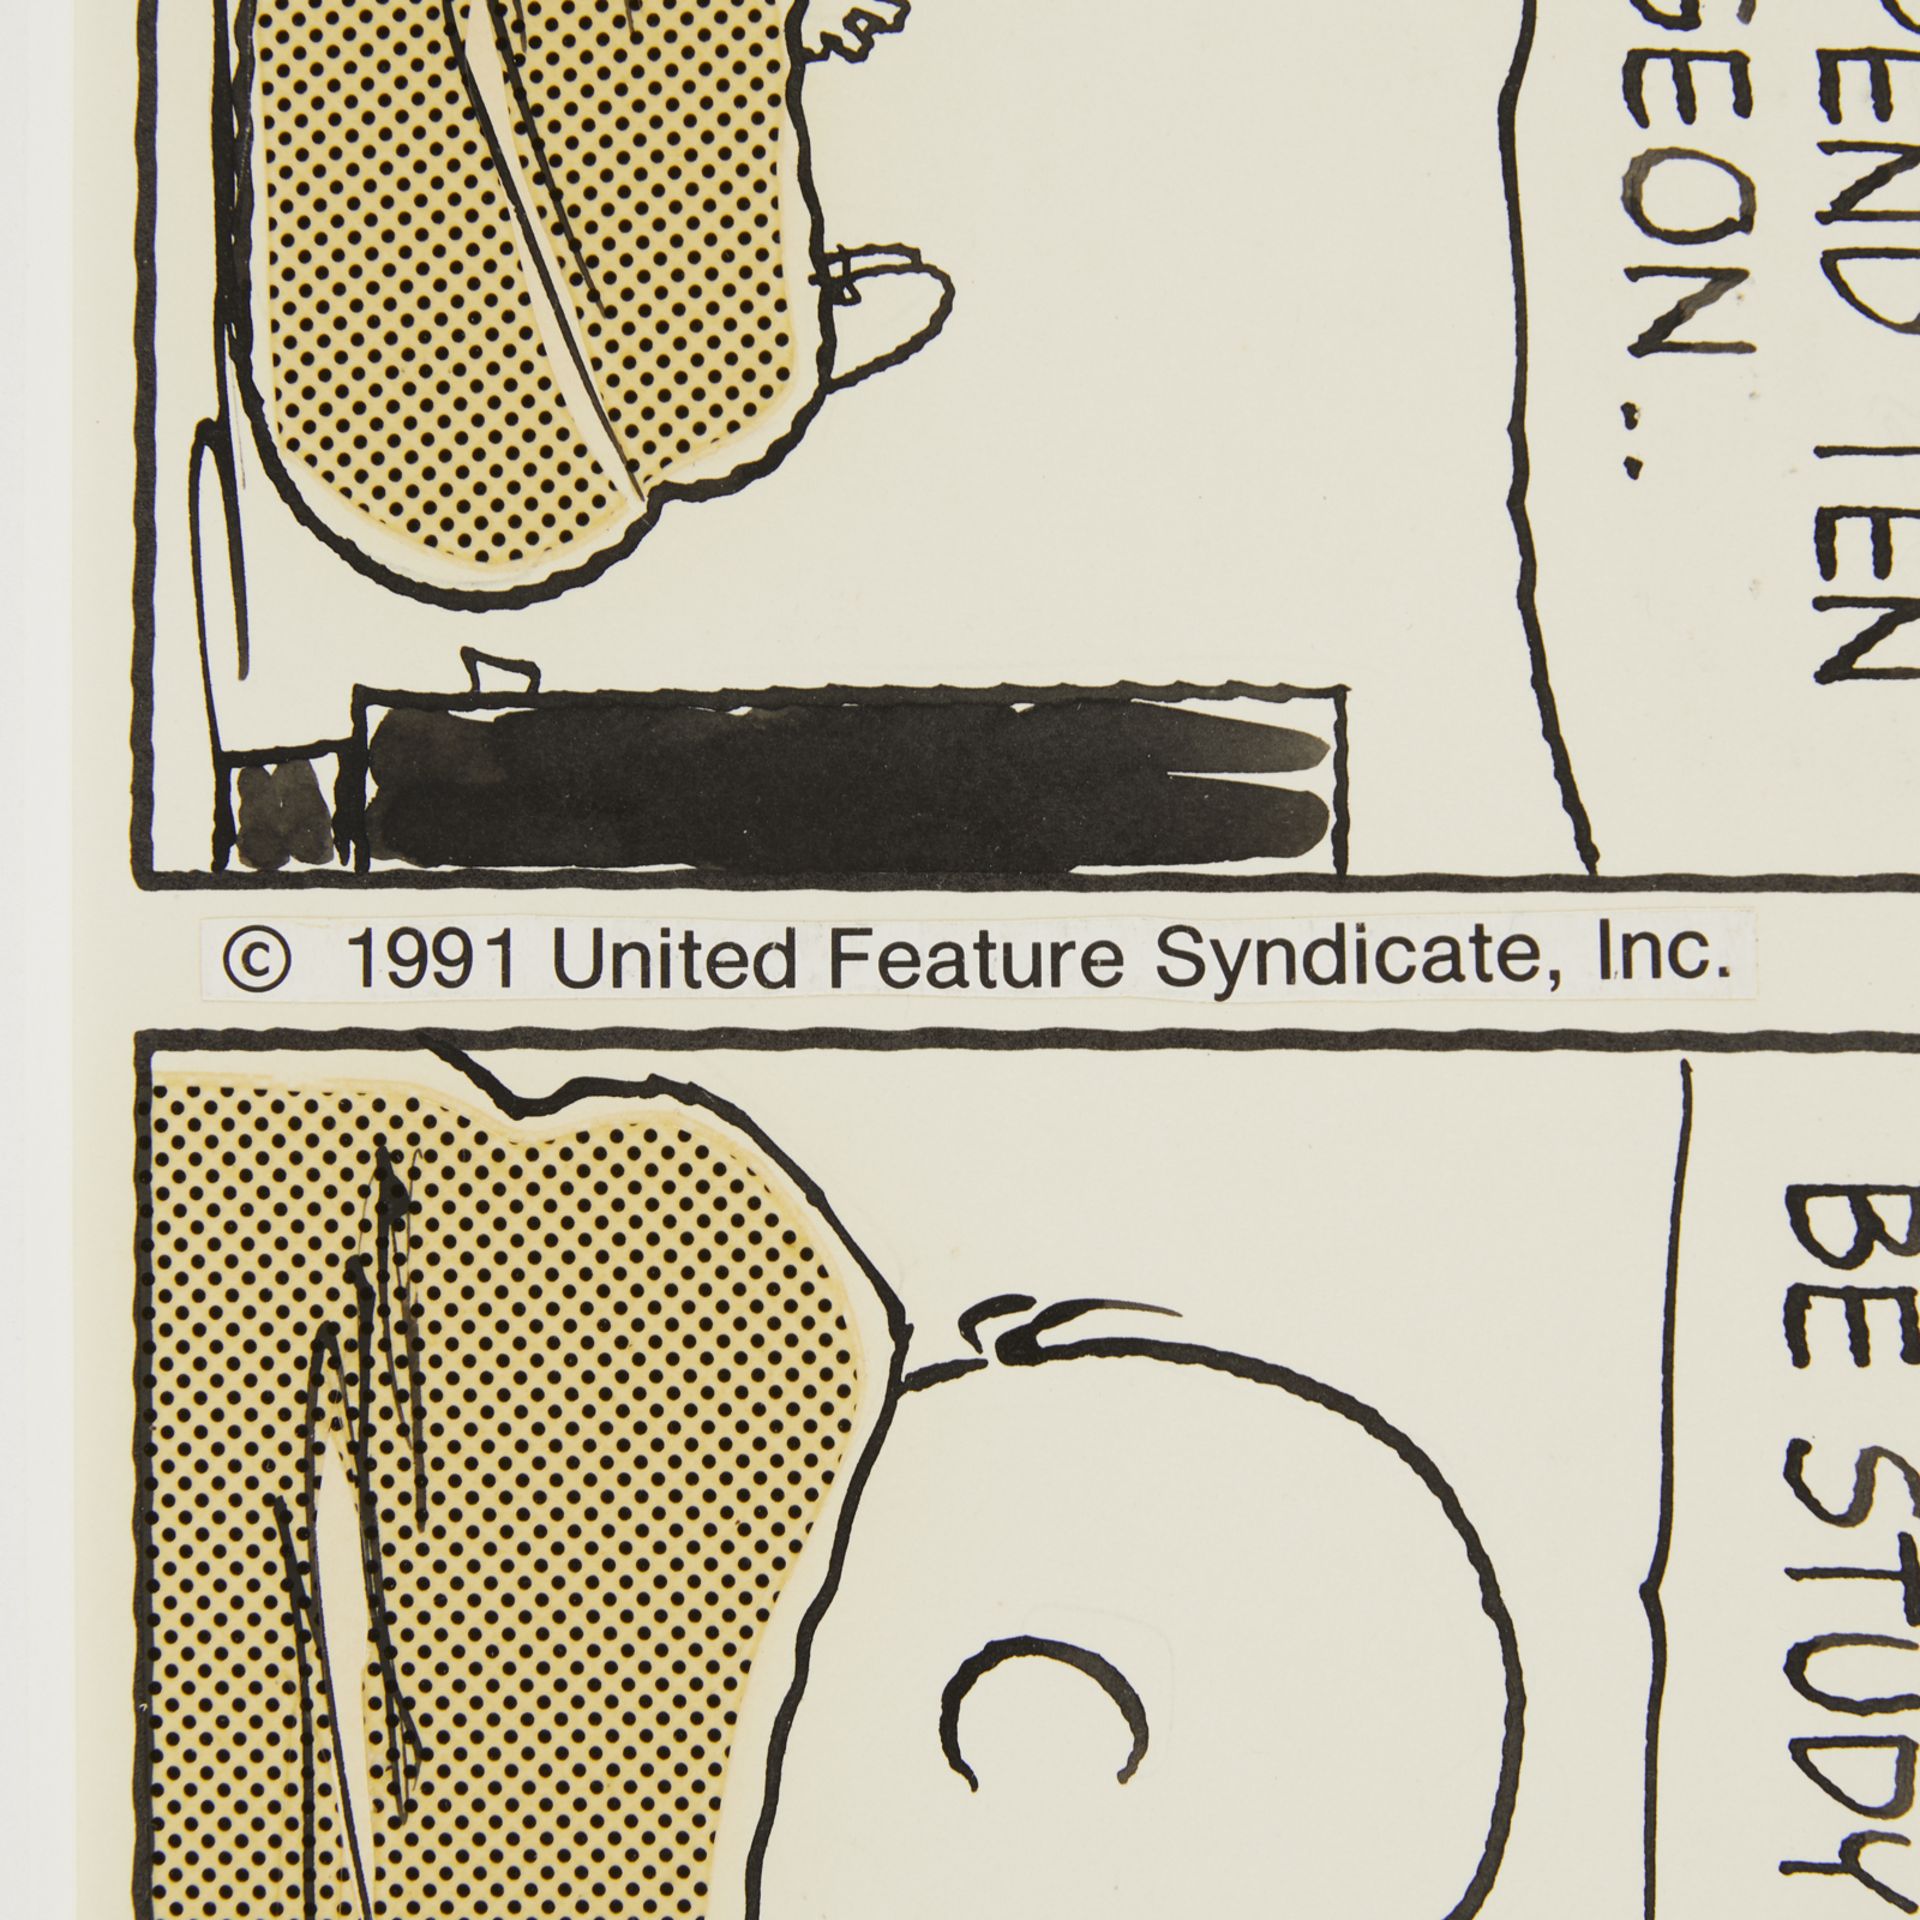 Charles Schulz Original Peanuts Comic Strip 1991 - Image 2 of 9